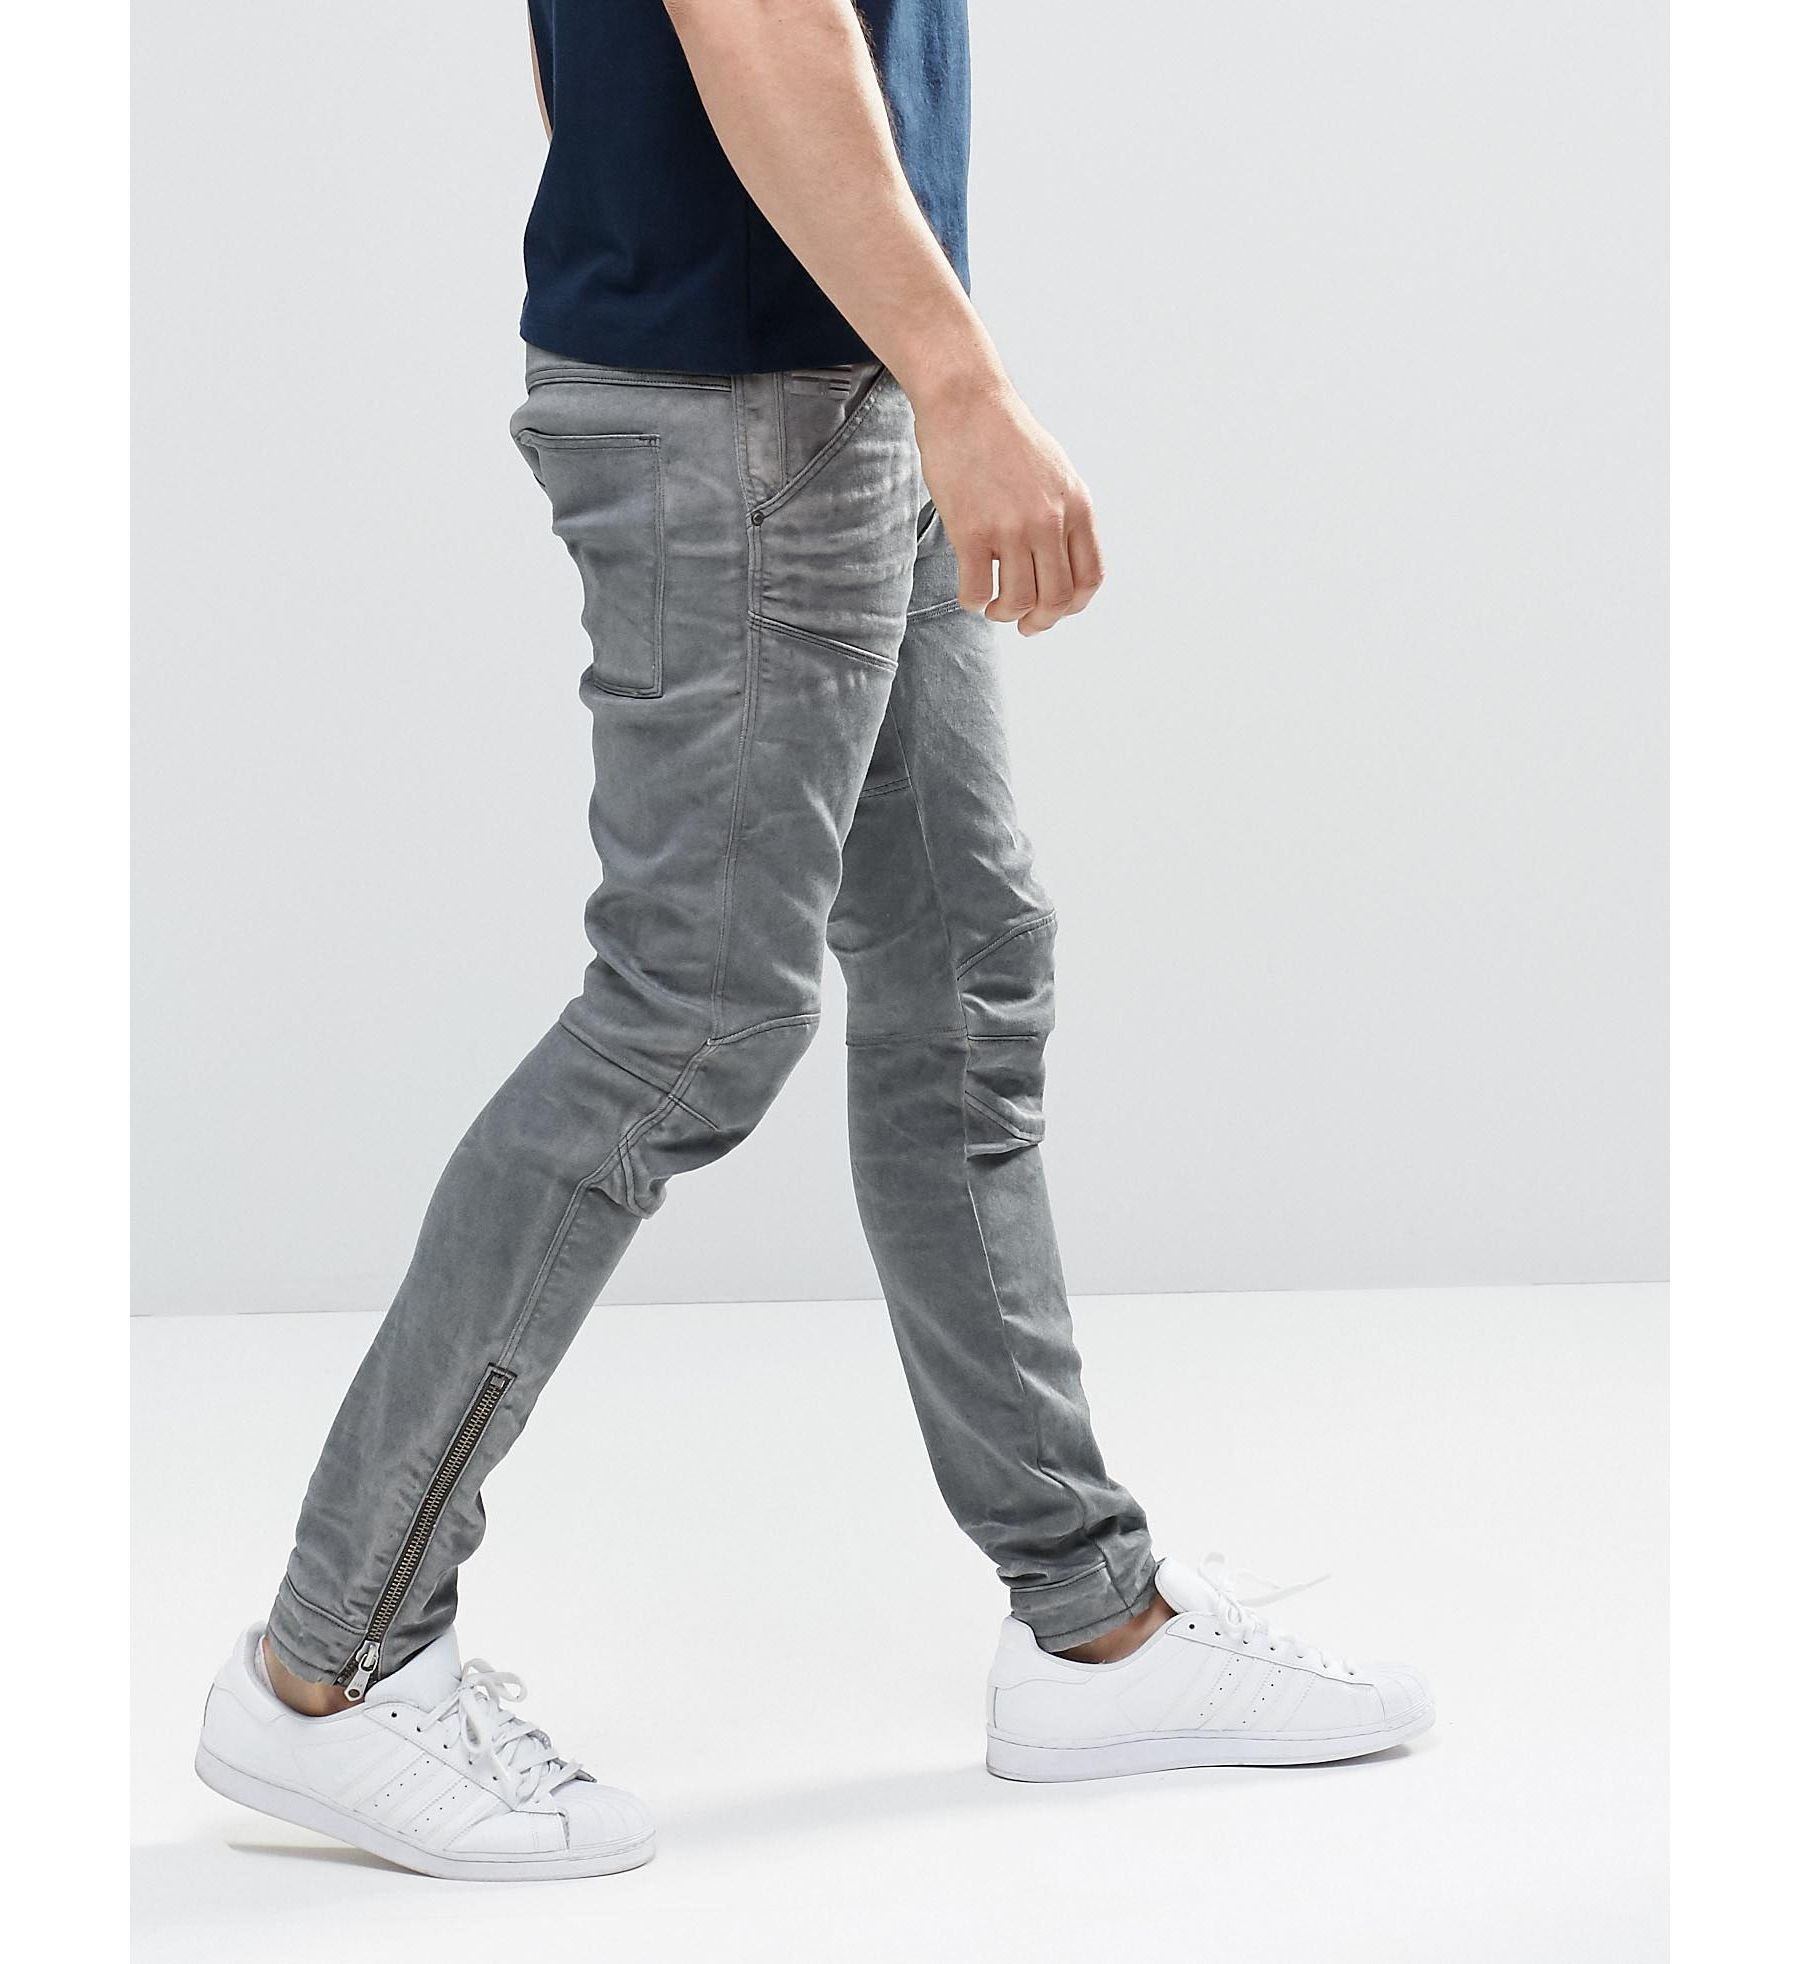 G-Star RAW Denim 5620 3d Ankle Zip Super Slim Jeans for Men - Lyst